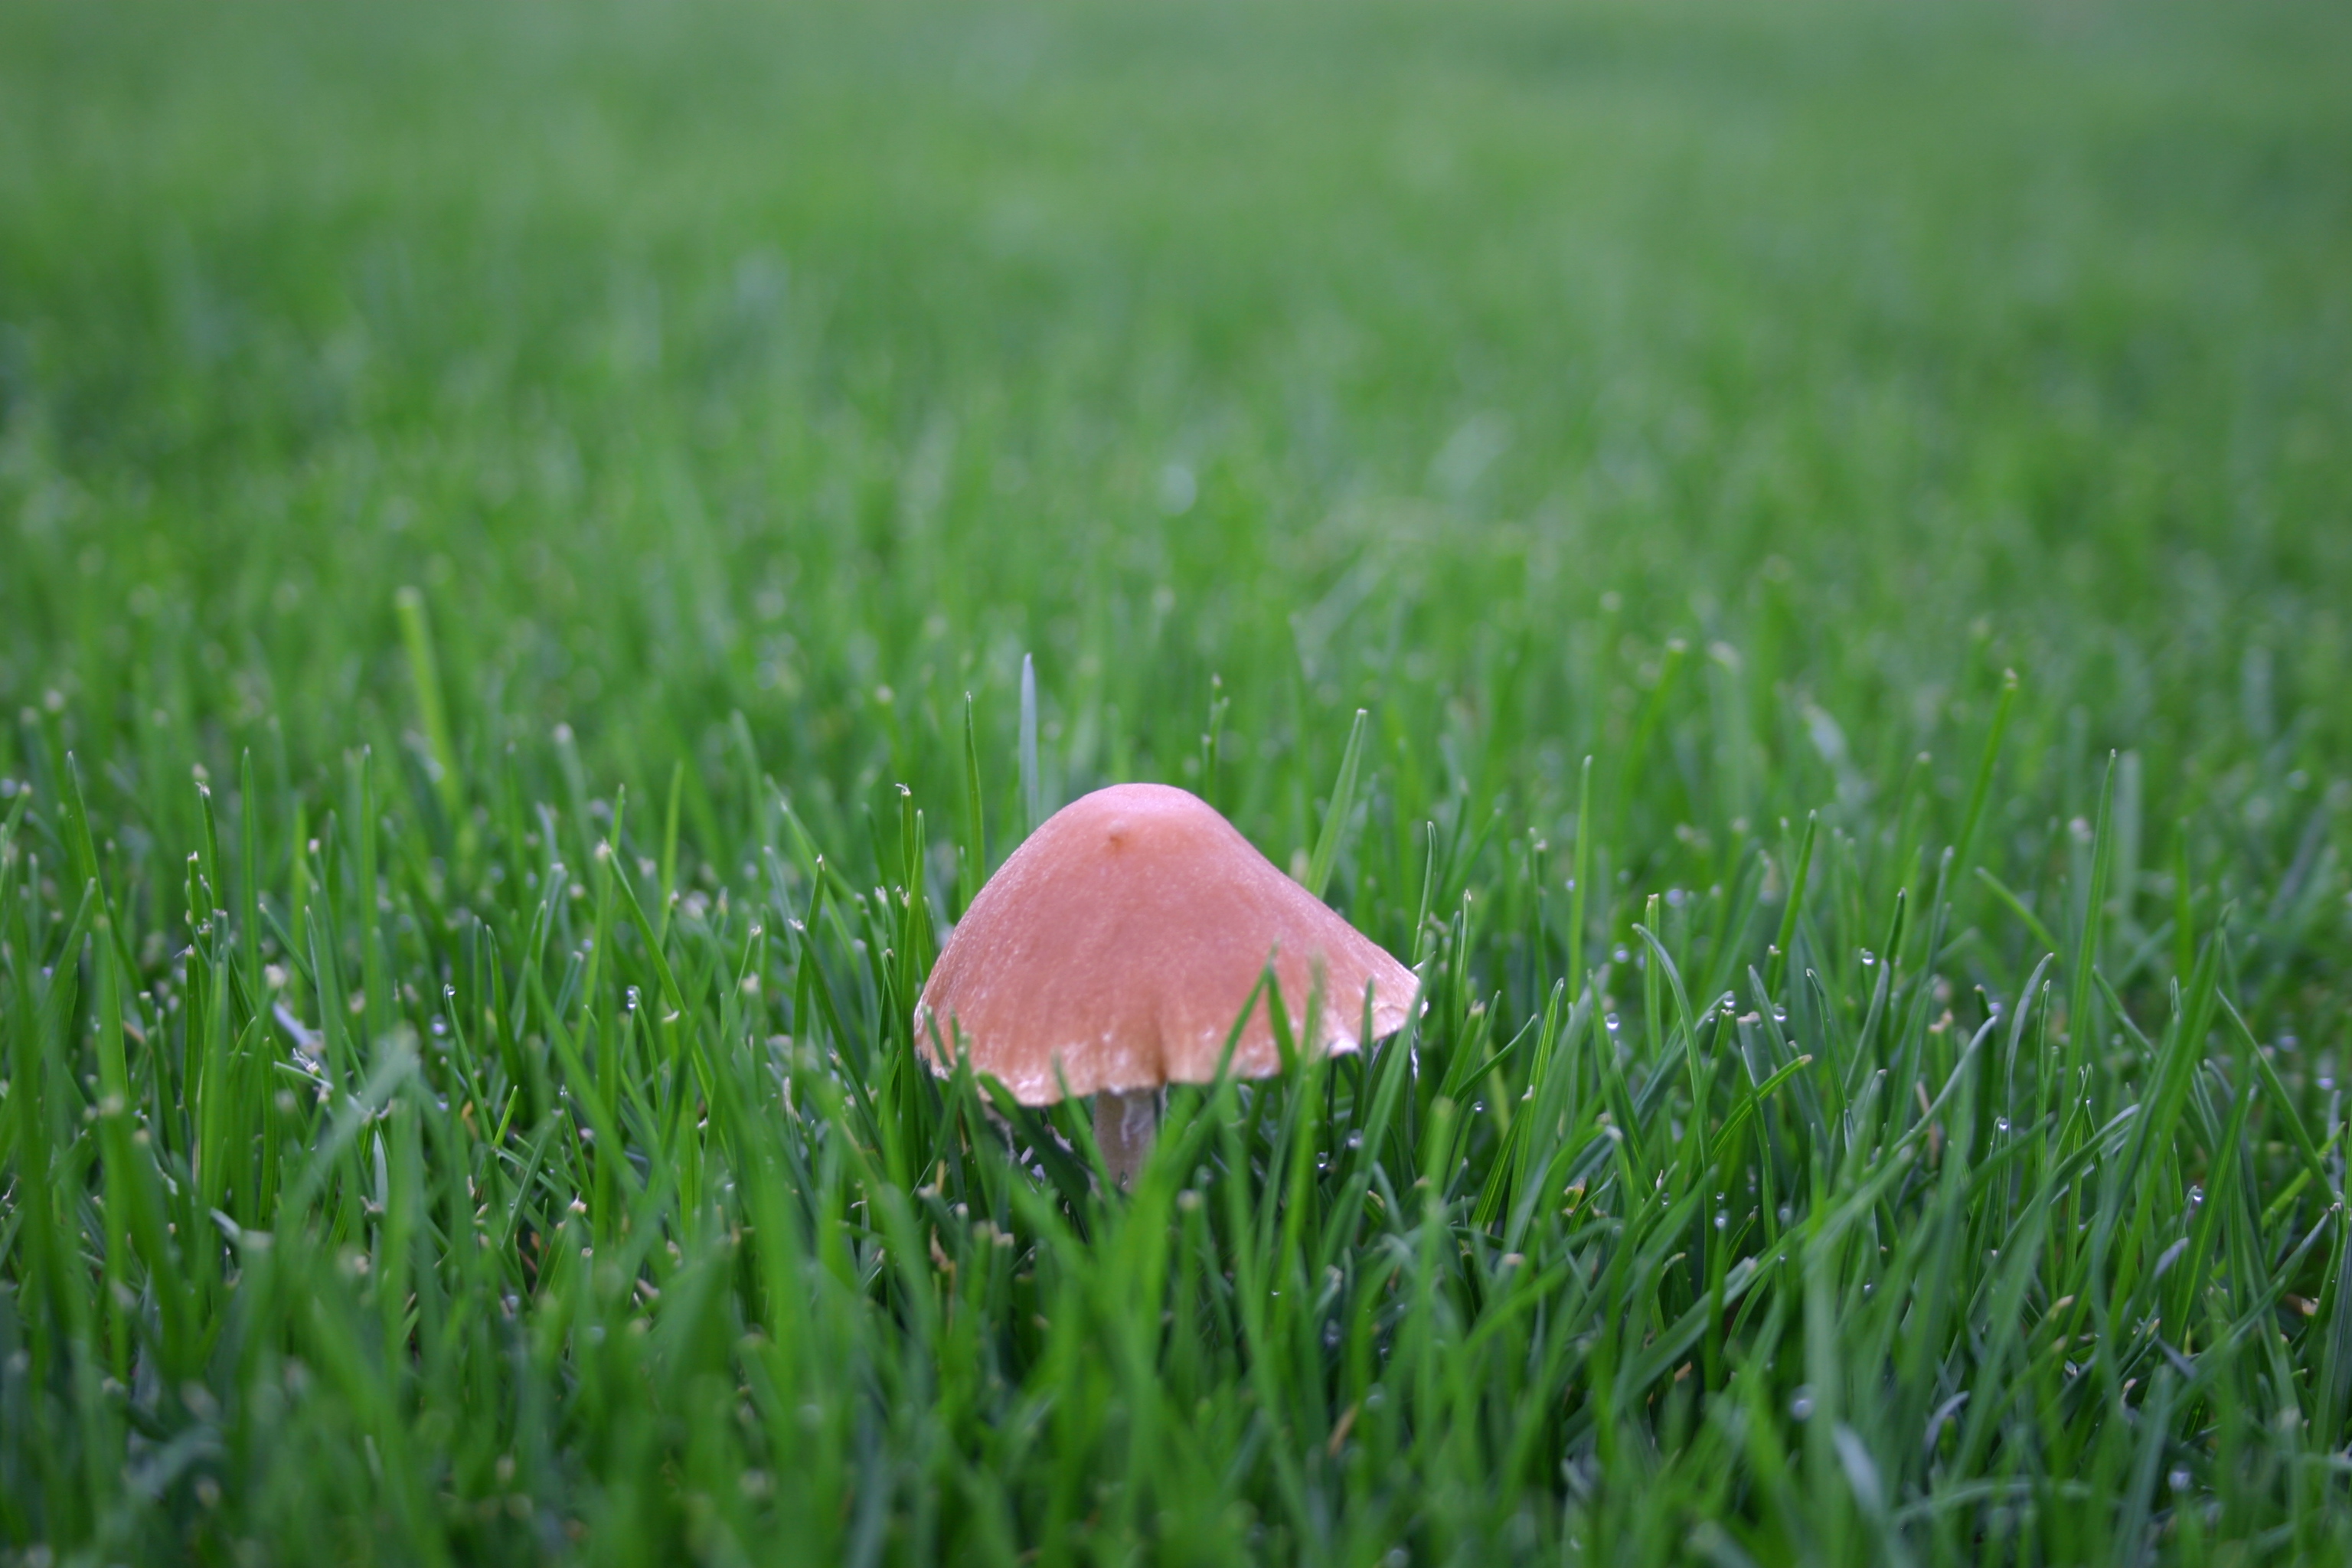 Pink mushroom in green grass.